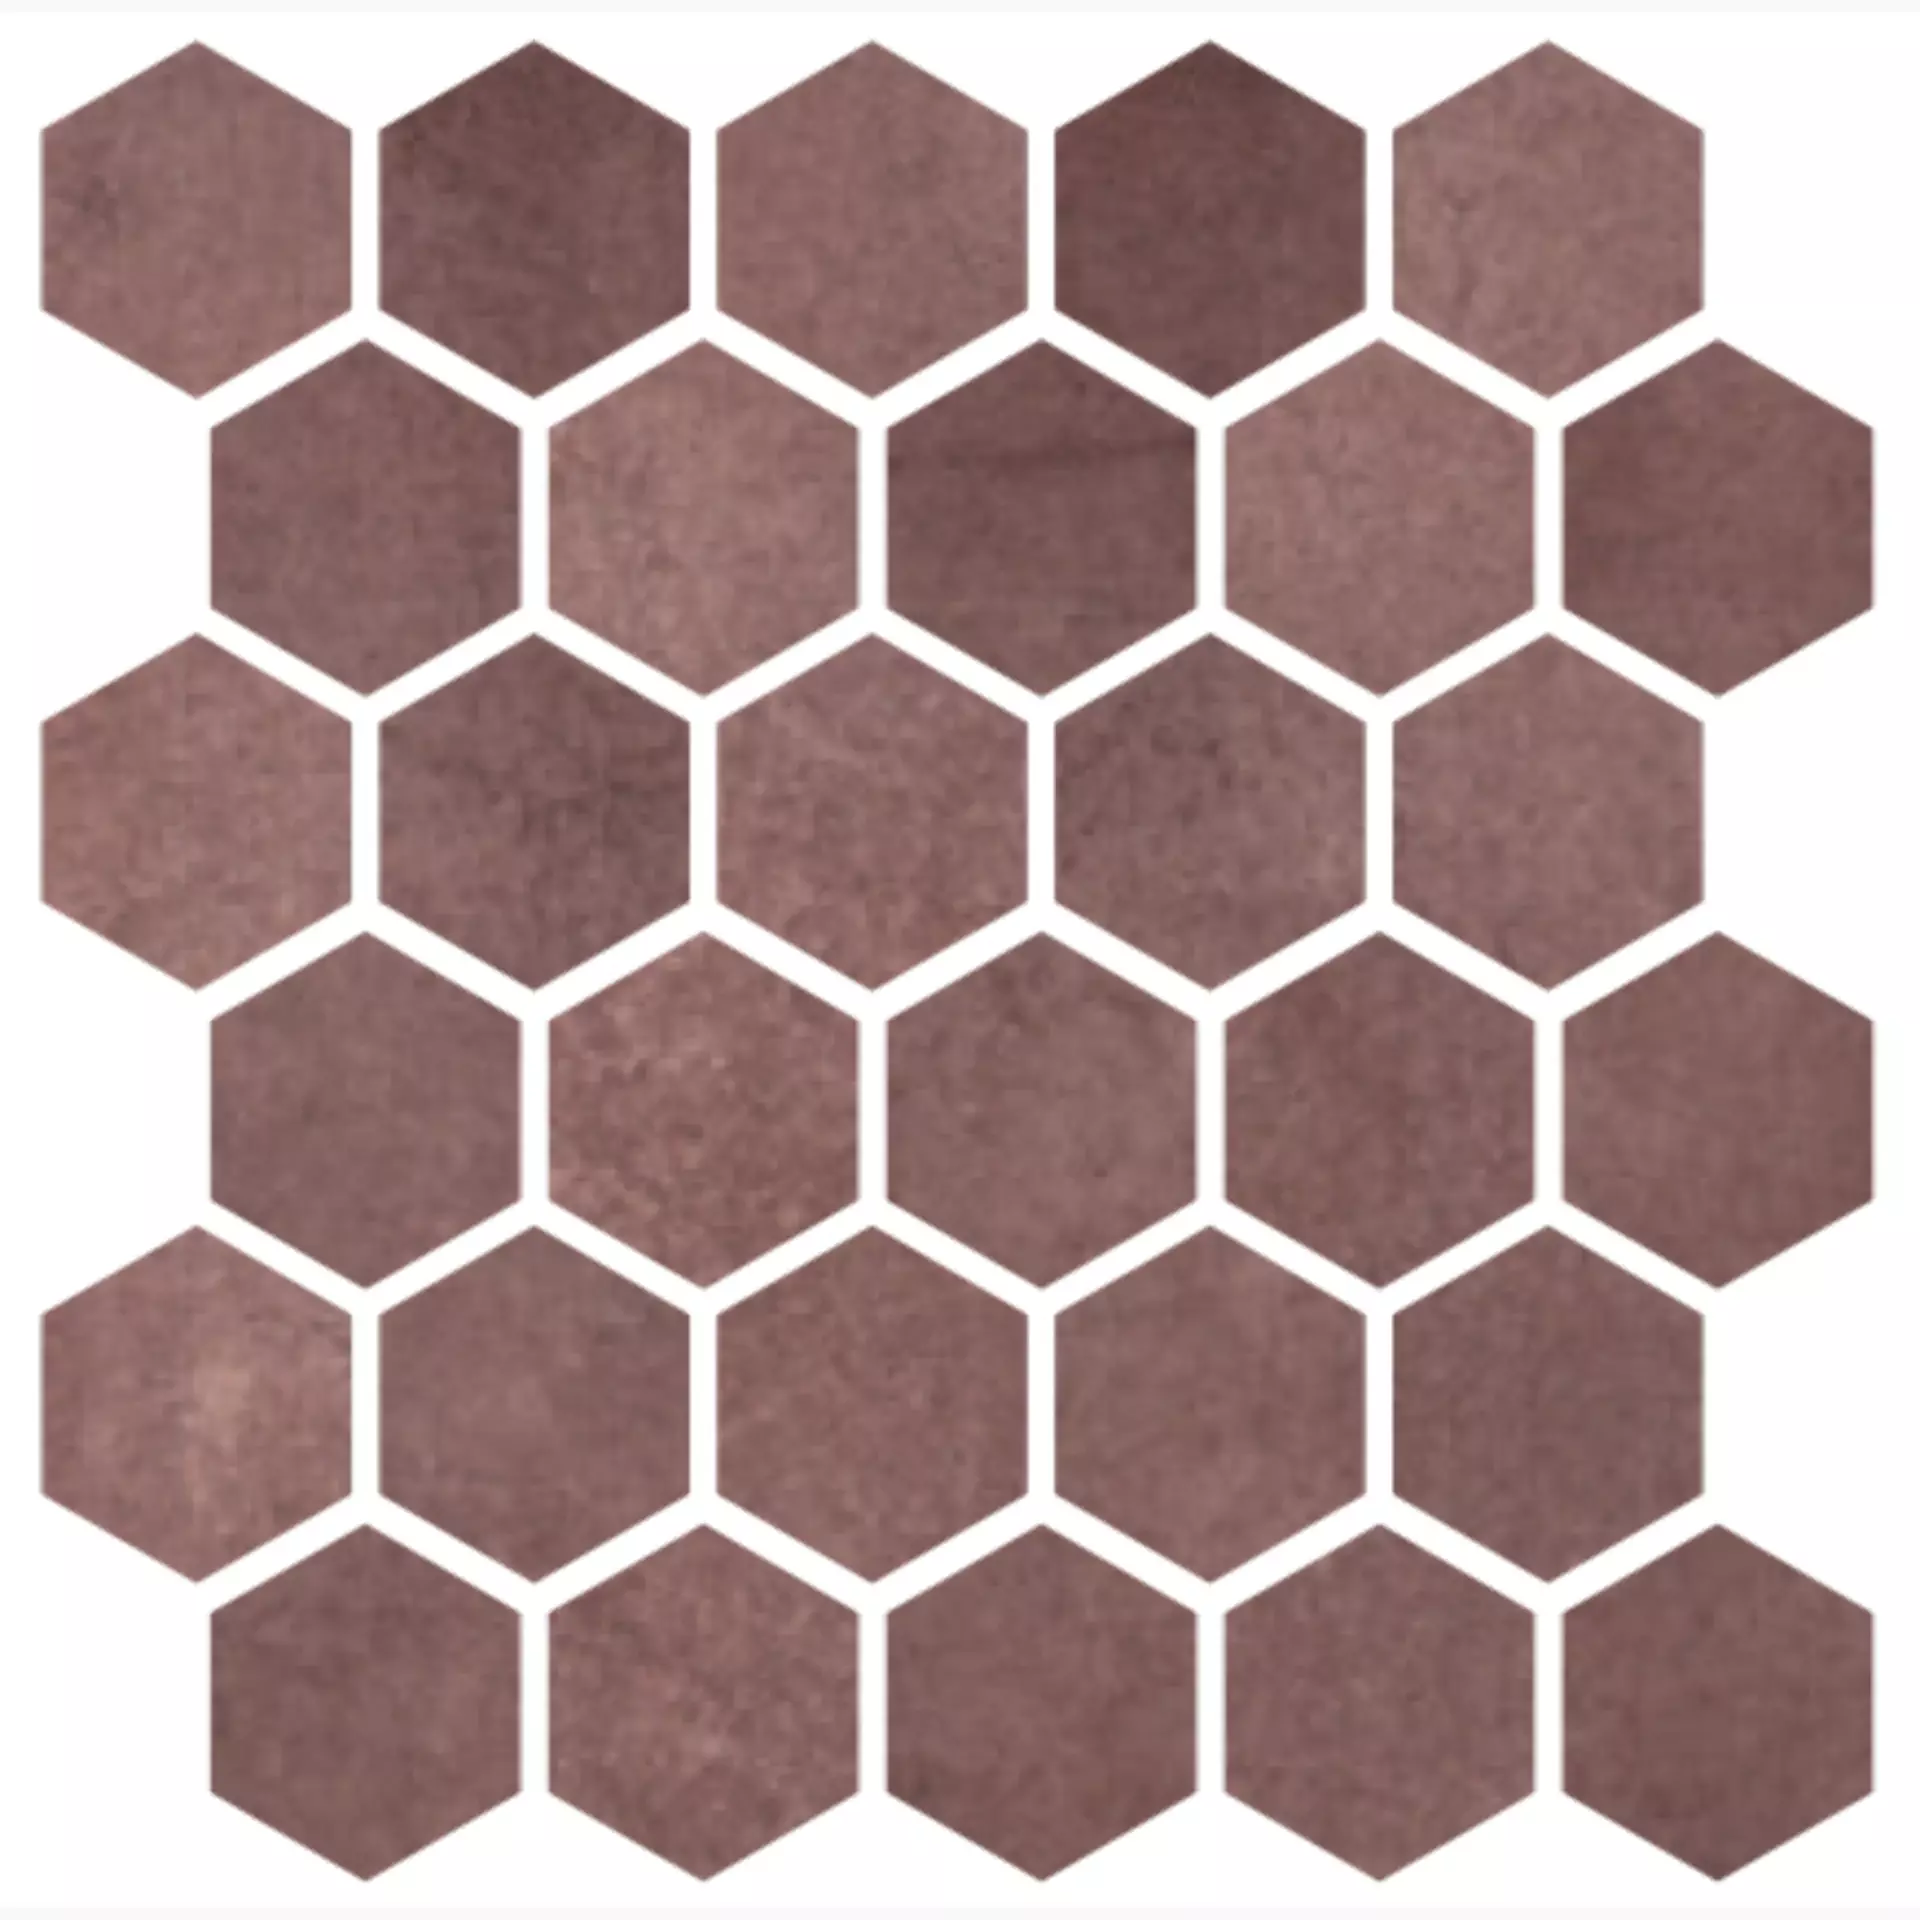 CIR Materia Prima Jewel Naturale Mosaic Hexagon 1069913 27x27cm 10mm